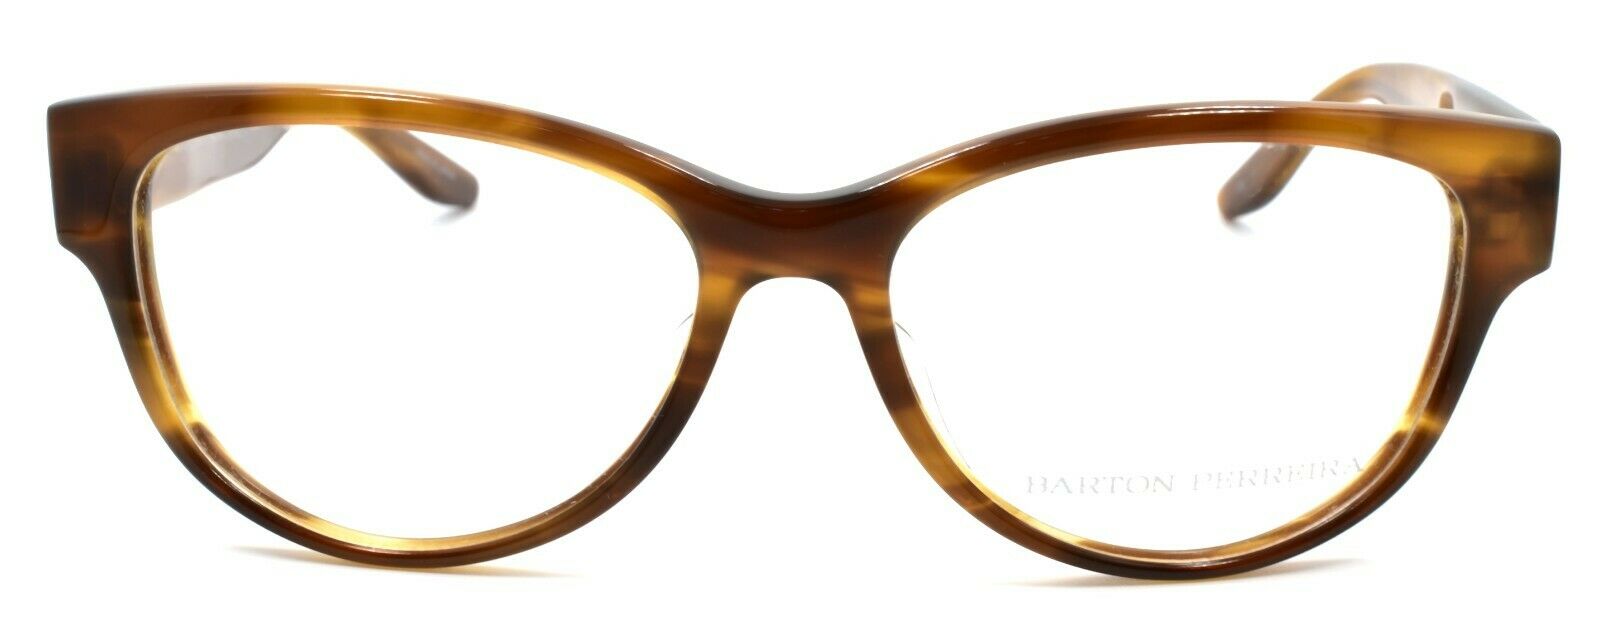 2-Barton Perreira Brooke UMT Women's Eyeglasses Asian Fit 53-16-140 Umber Tortoise-672263037699-IKSpecs